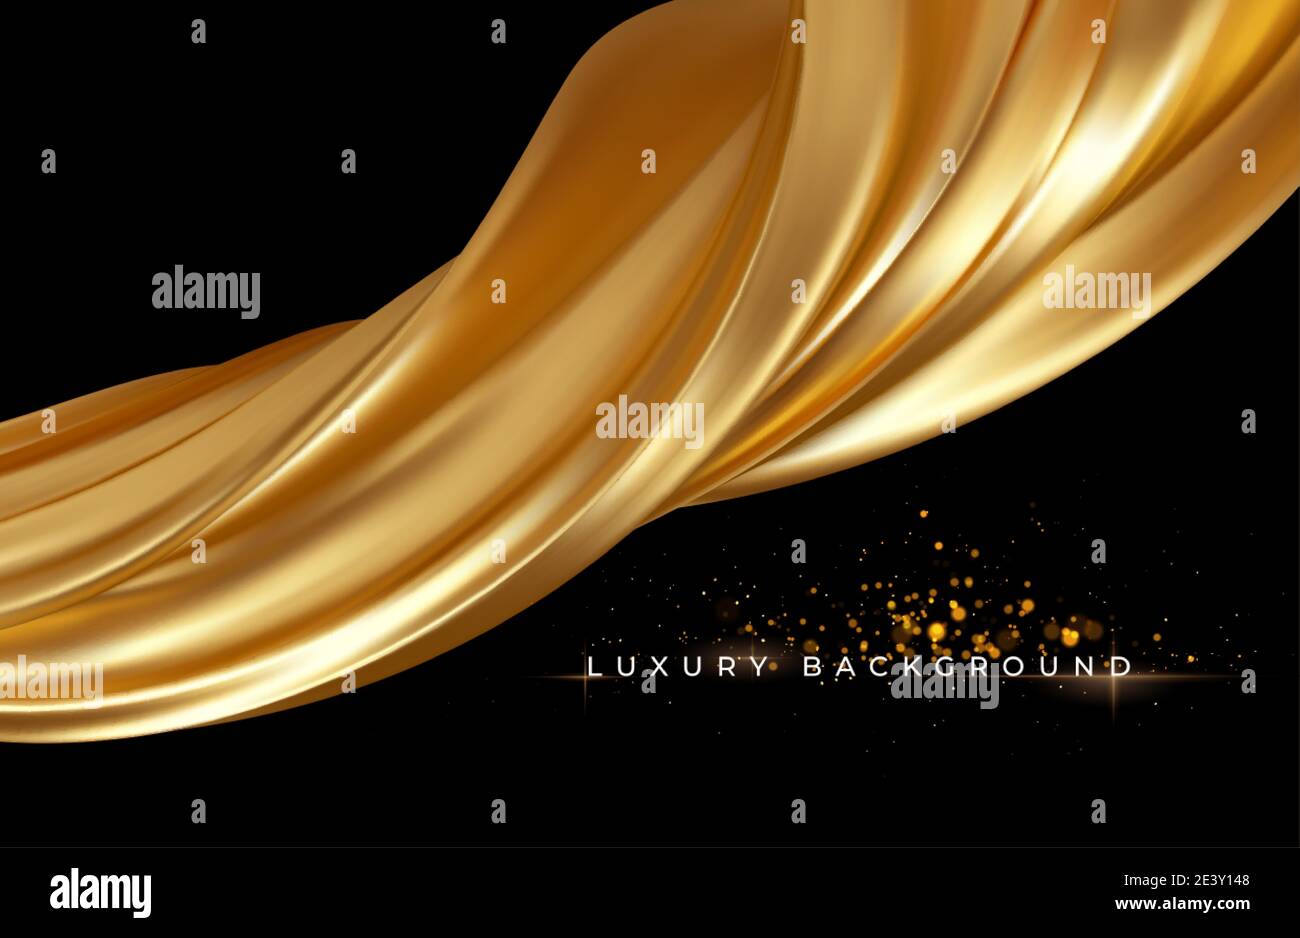 Gold metallic silk flowing wave luxury trendy background. Background for presentation, brochure, booklet, poster. Vector illustration Stock Vector